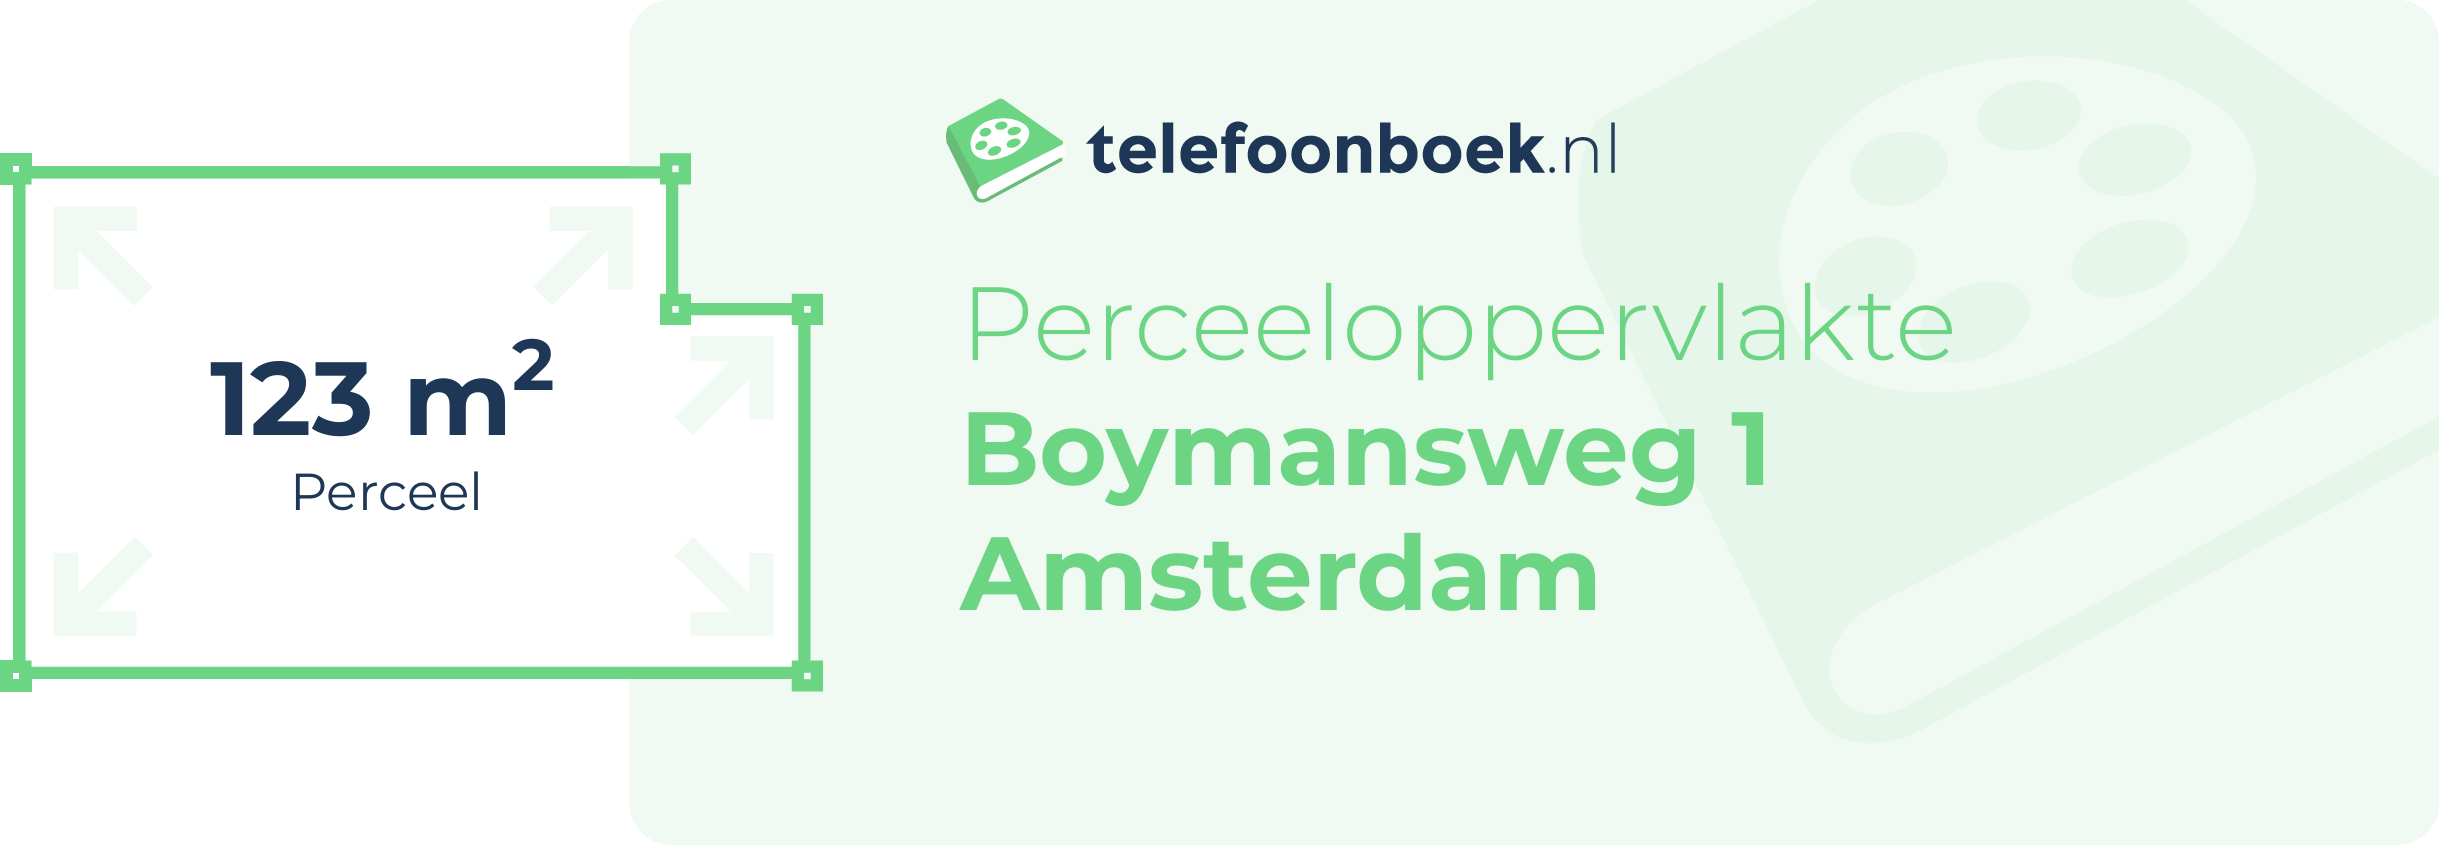 Perceeloppervlakte Boymansweg 1 Amsterdam